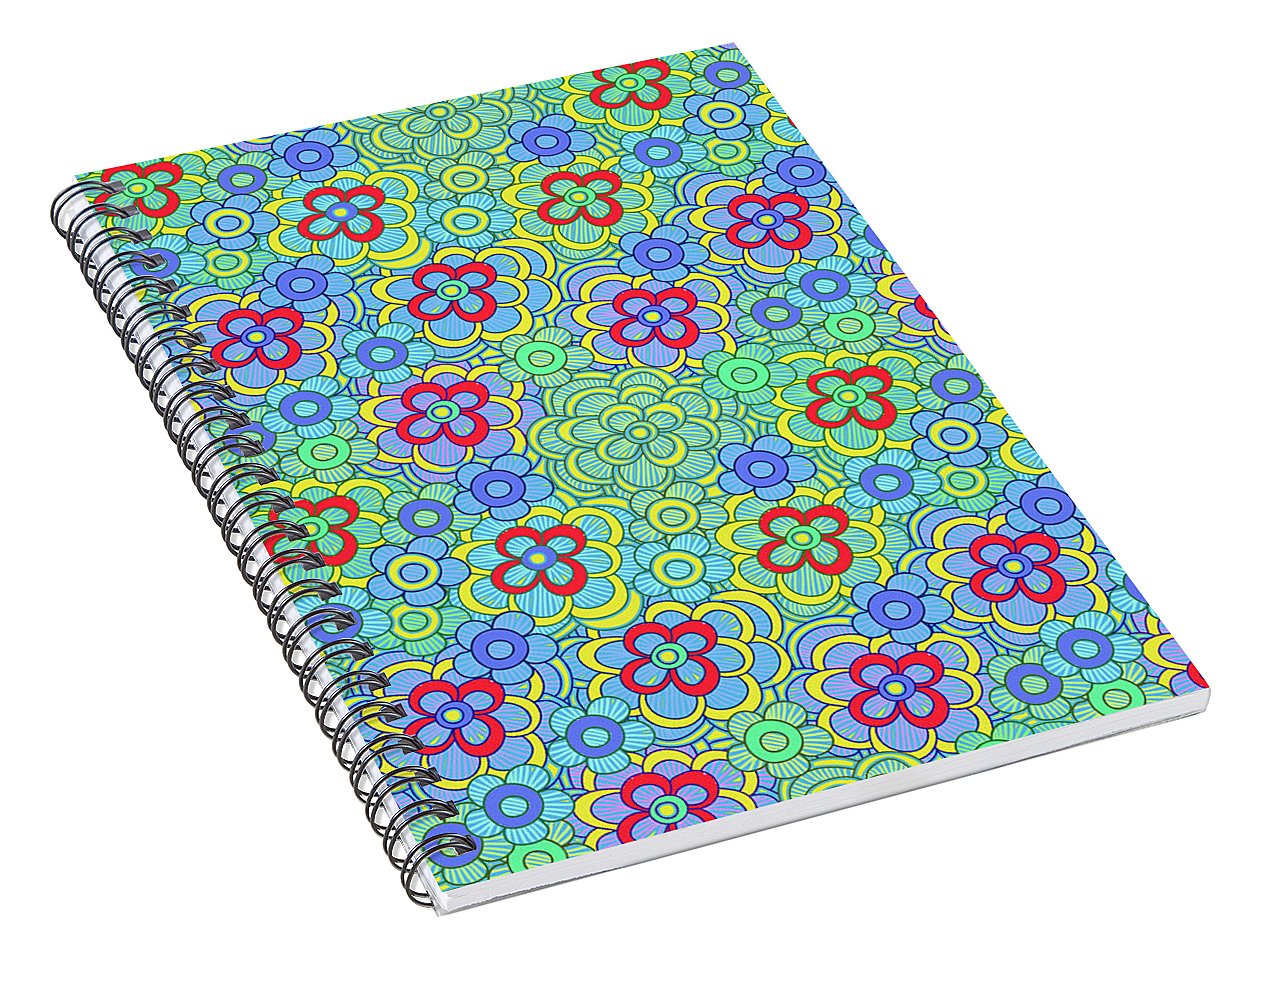 Green Retro Flowers - Spiral Notebook